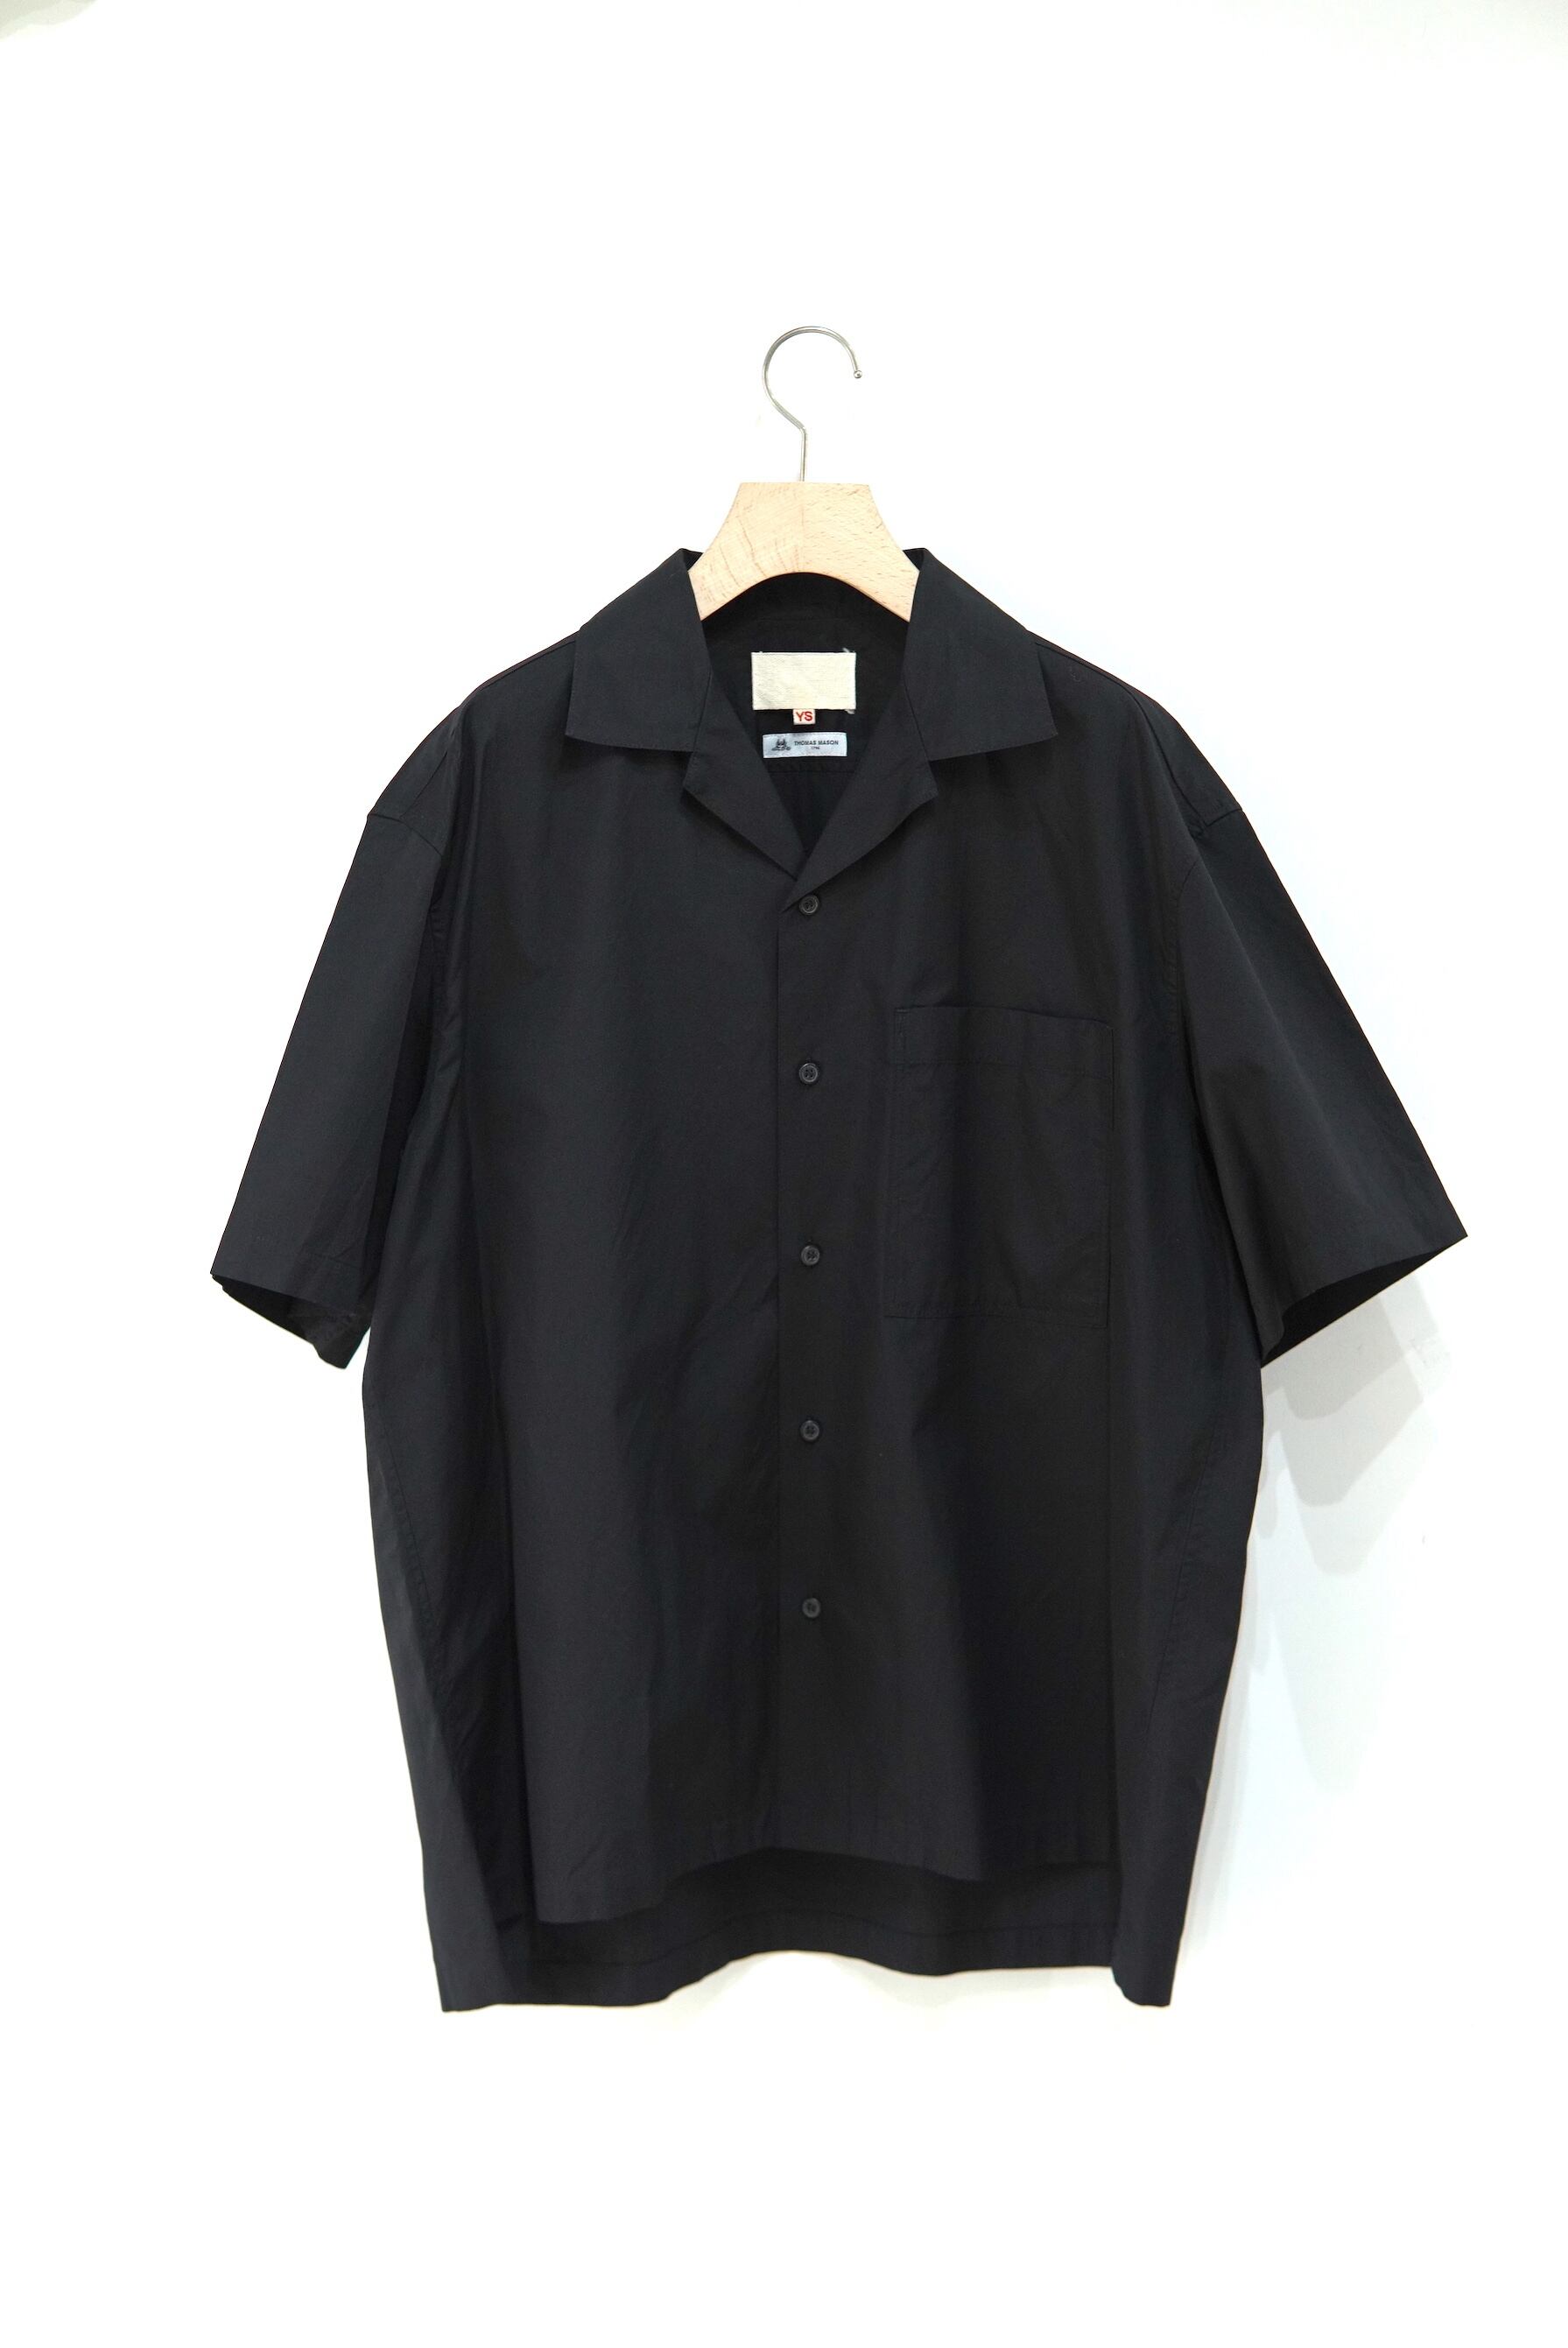 YOKO SAKAMOTO / Open Collar Shirt / YS - 23SS - 57